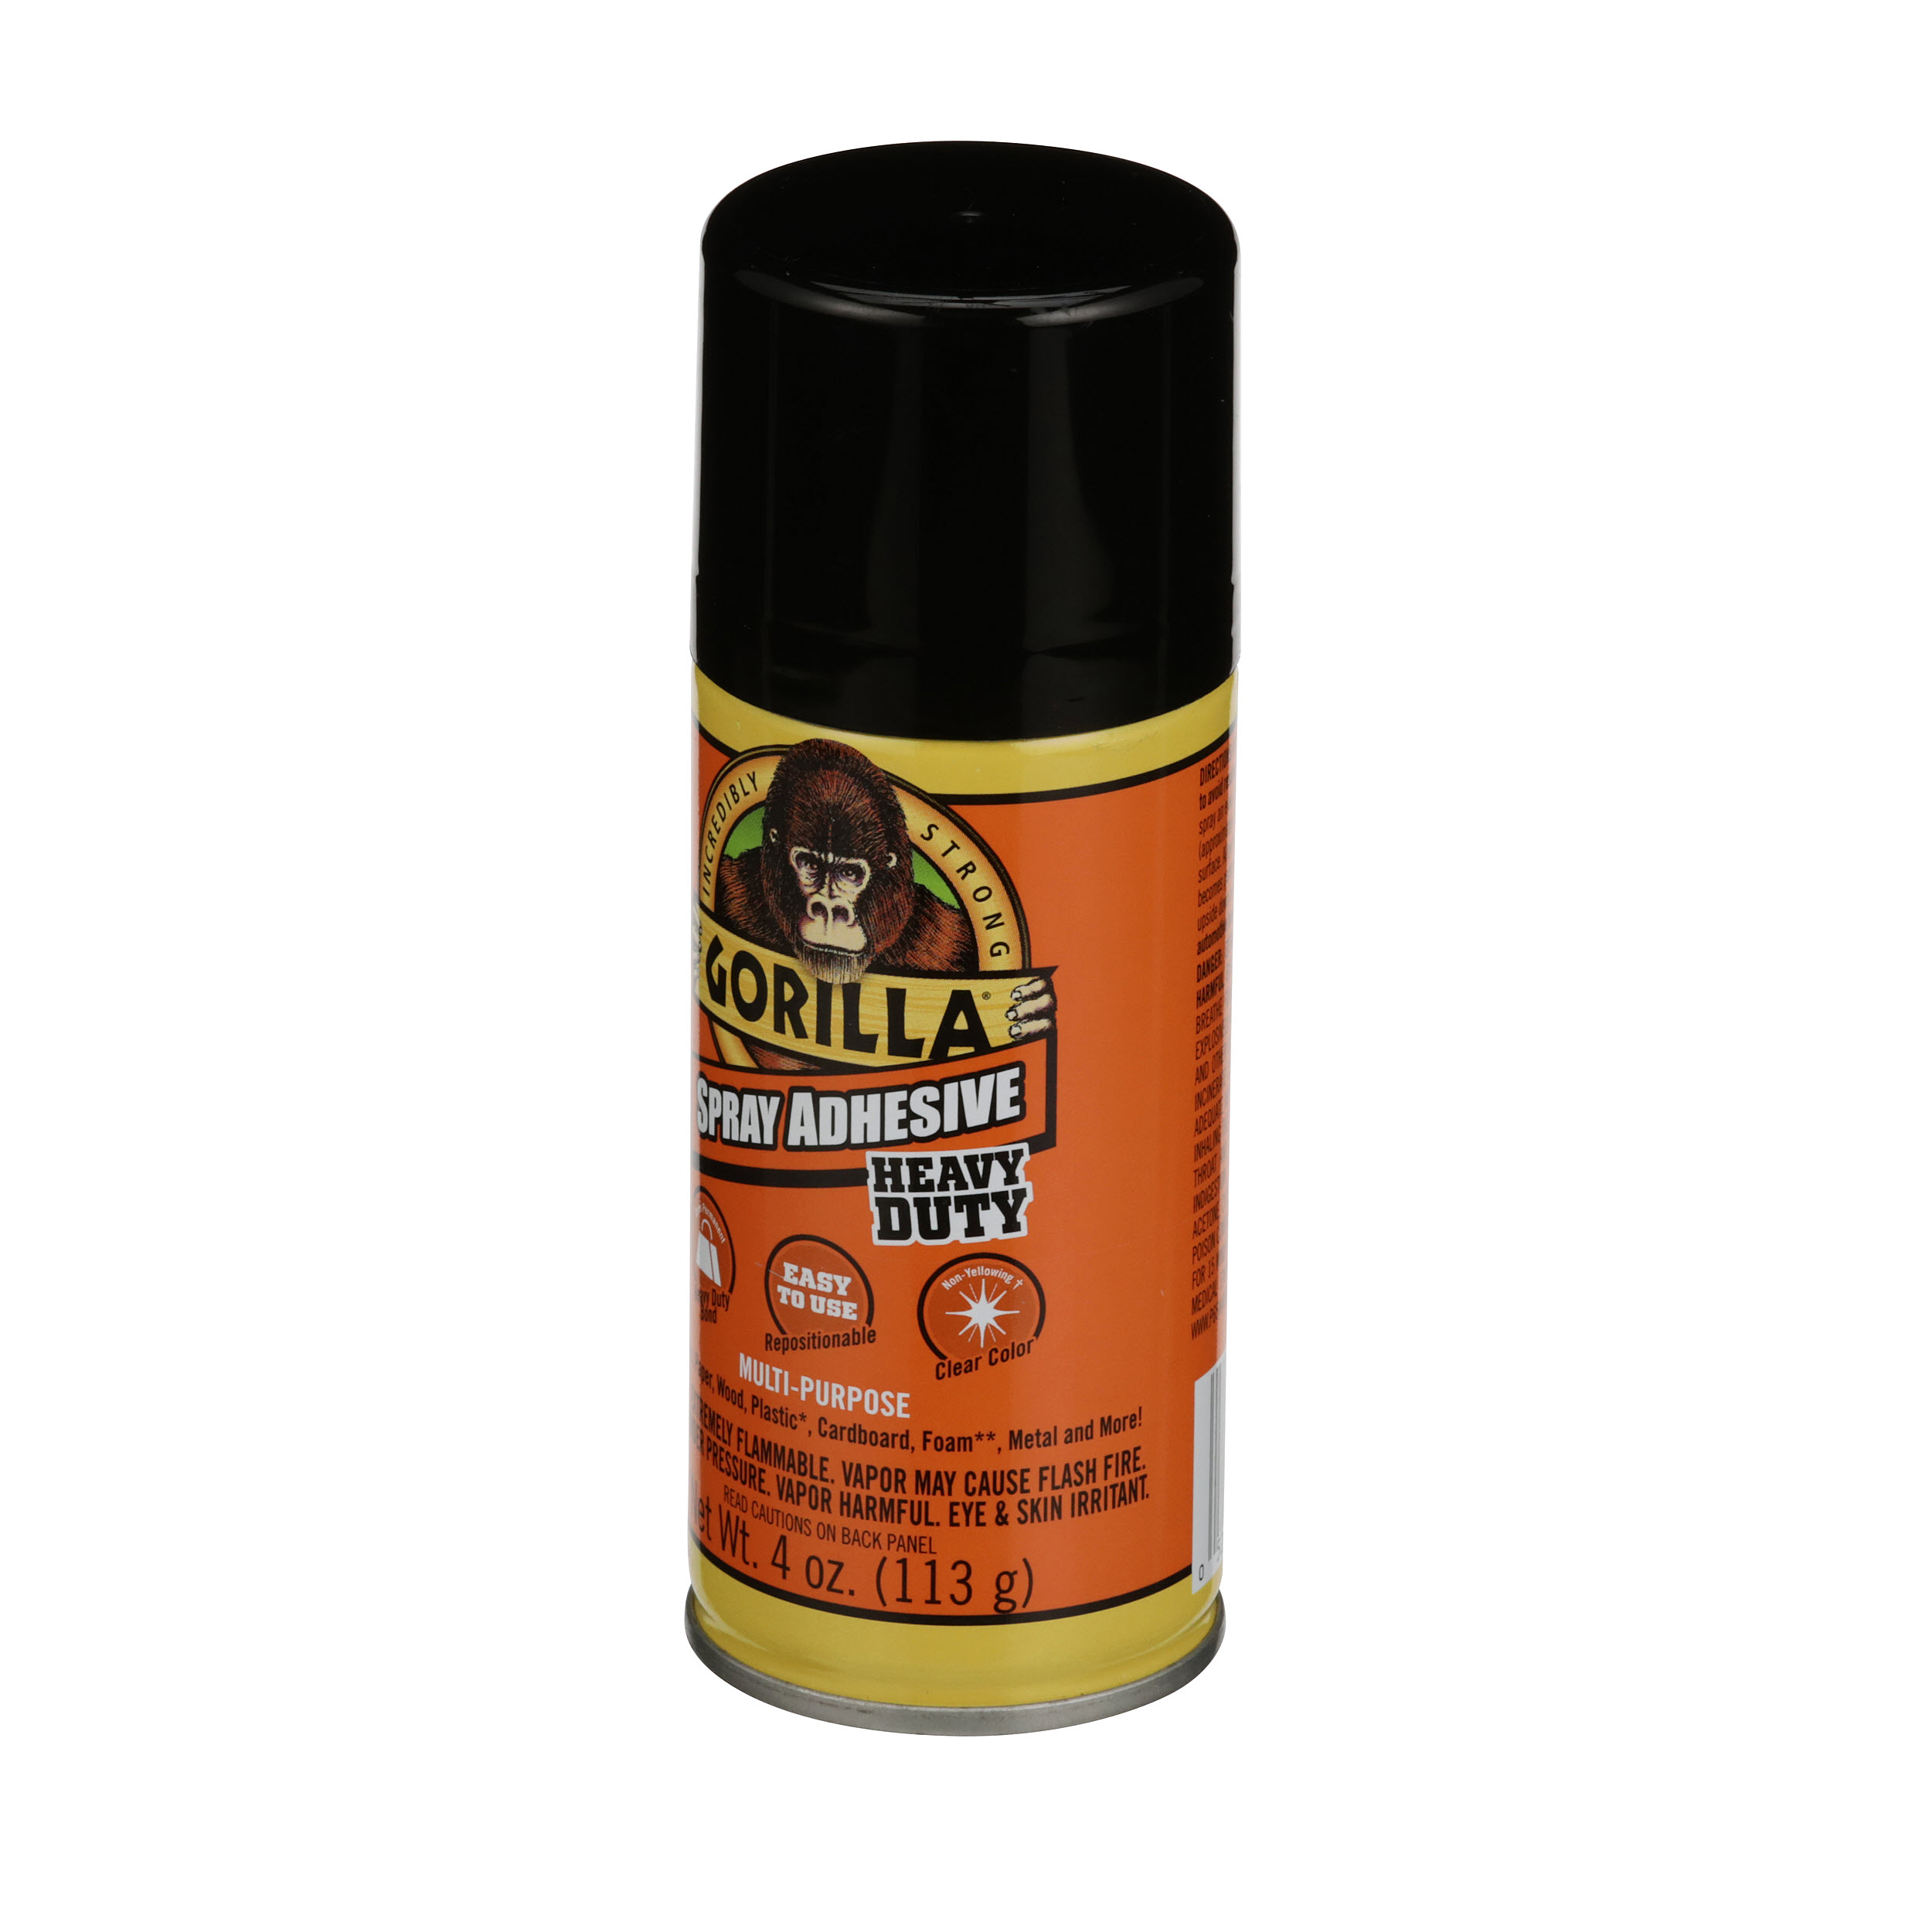 The Gorilla Glue Company - Gorilla Spray Adhesive is heavy-duty